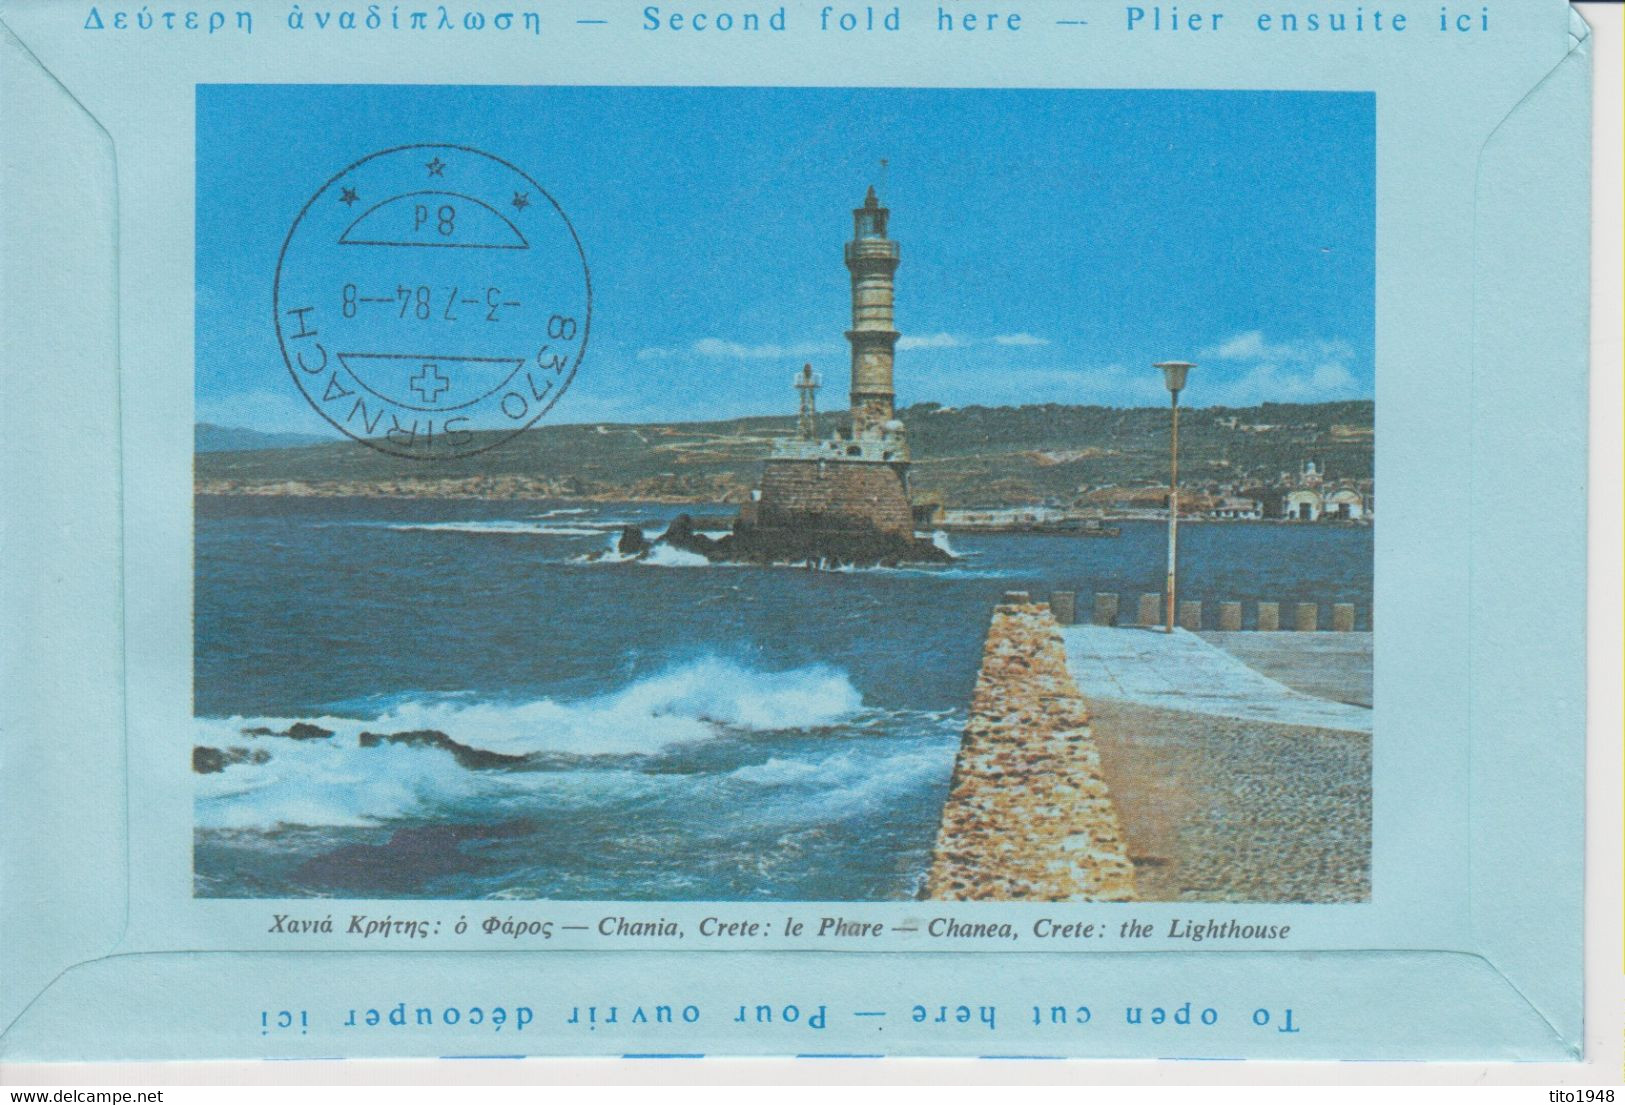 Hellas, 1984, Frama, Lettercard,  To Switzerland, See Scans! - Briefe U. Dokumente